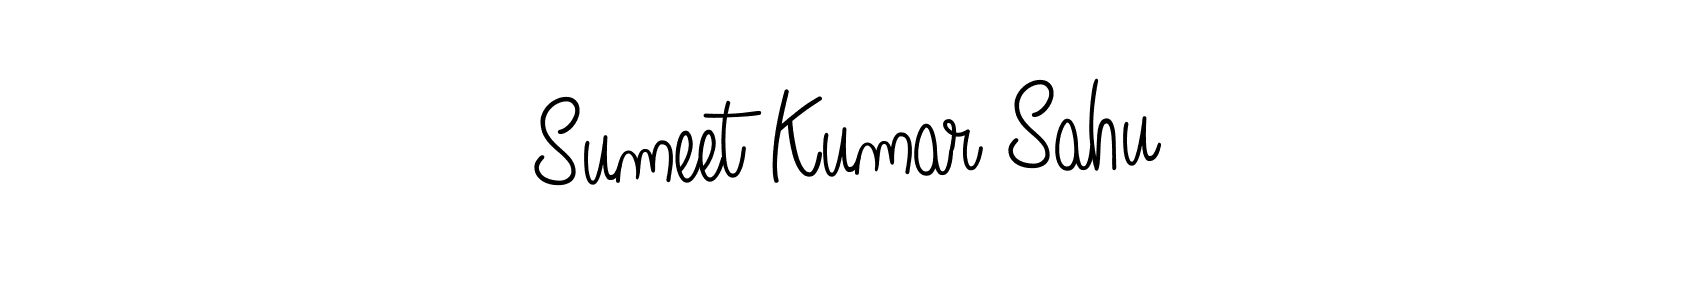 Make a beautiful signature design for name Sumeet Kumar Sahu. Use this online signature maker to create a handwritten signature for free. Sumeet Kumar Sahu signature style 5 images and pictures png